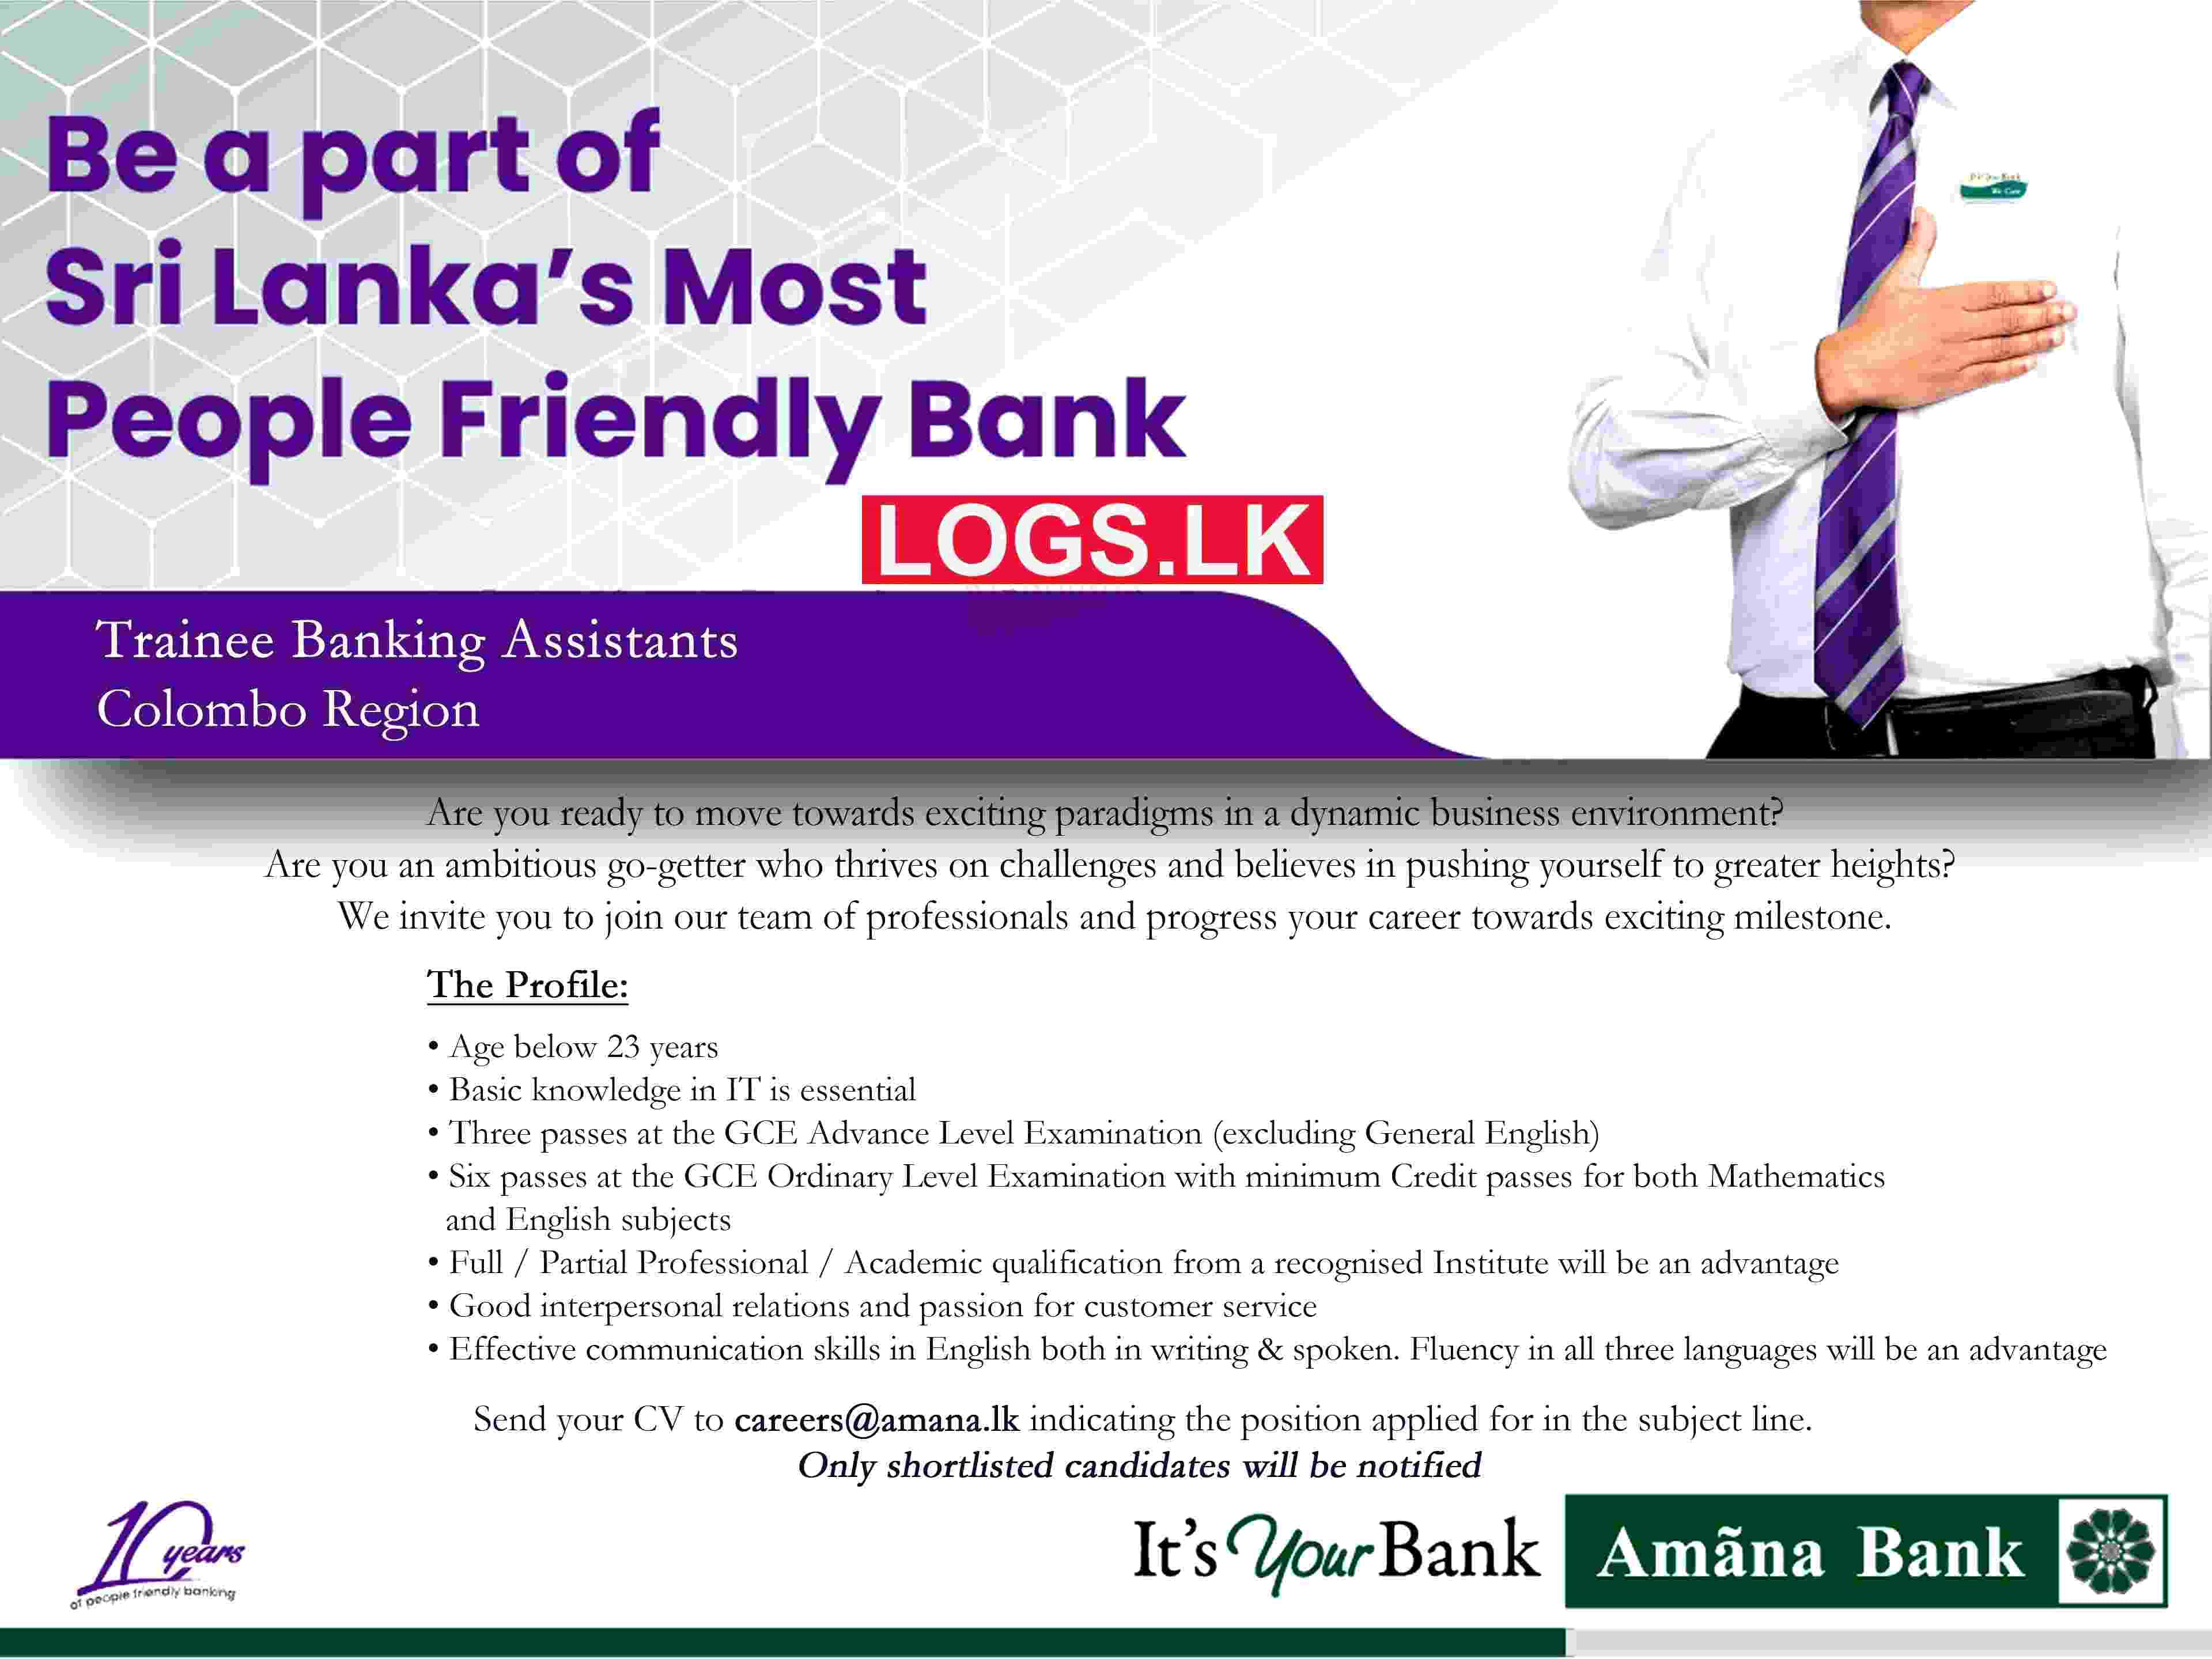 Trainee Banking Assistant - Colombo Region - Amana Bank Jobs Vacancies